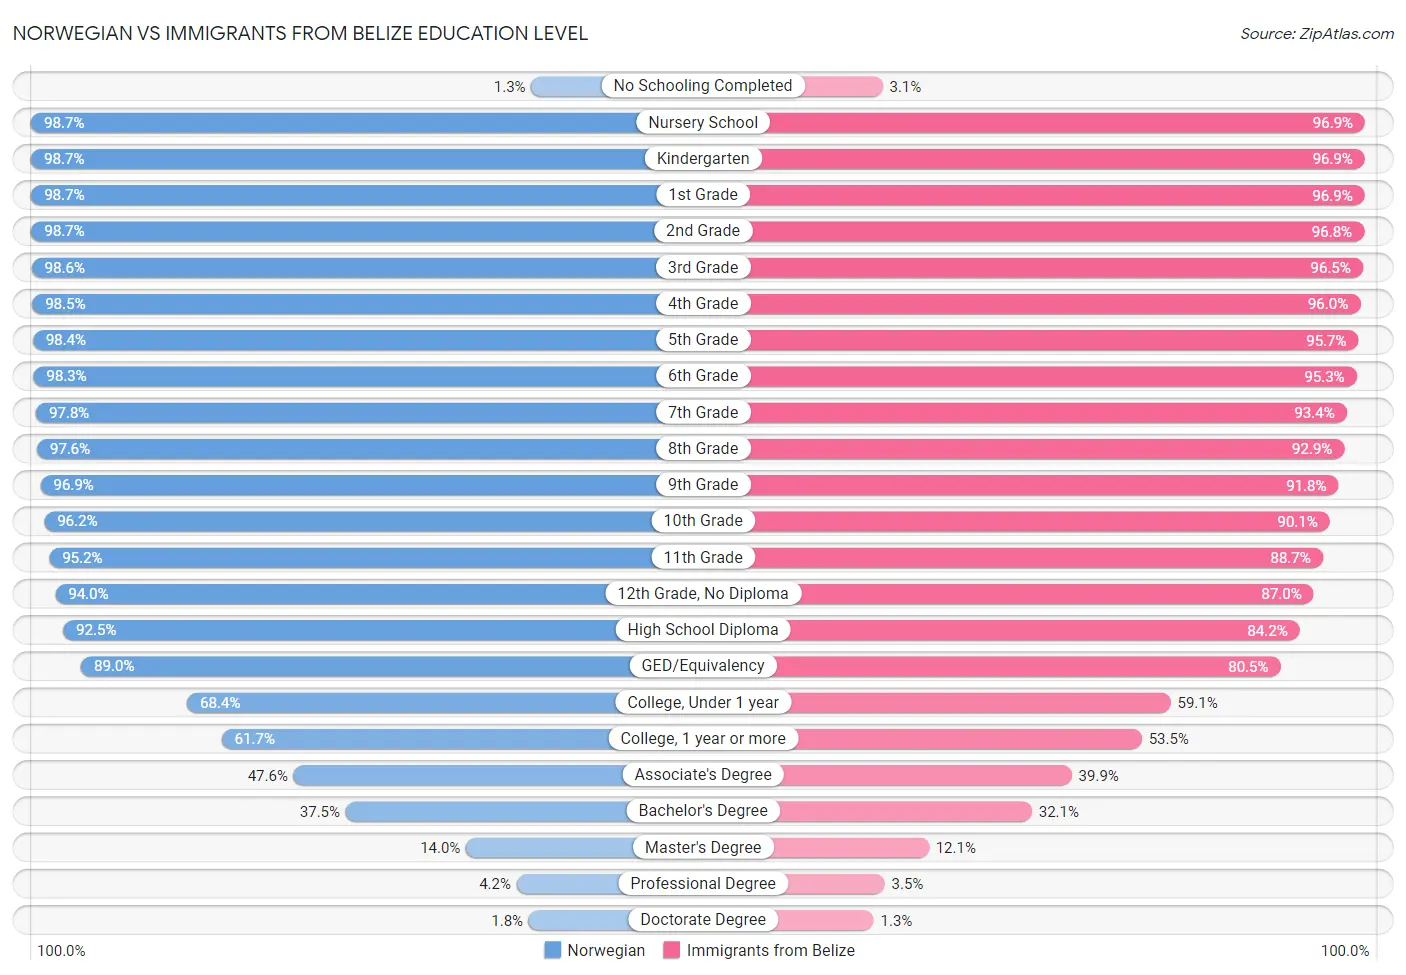 Norwegian vs Immigrants from Belize Education Level